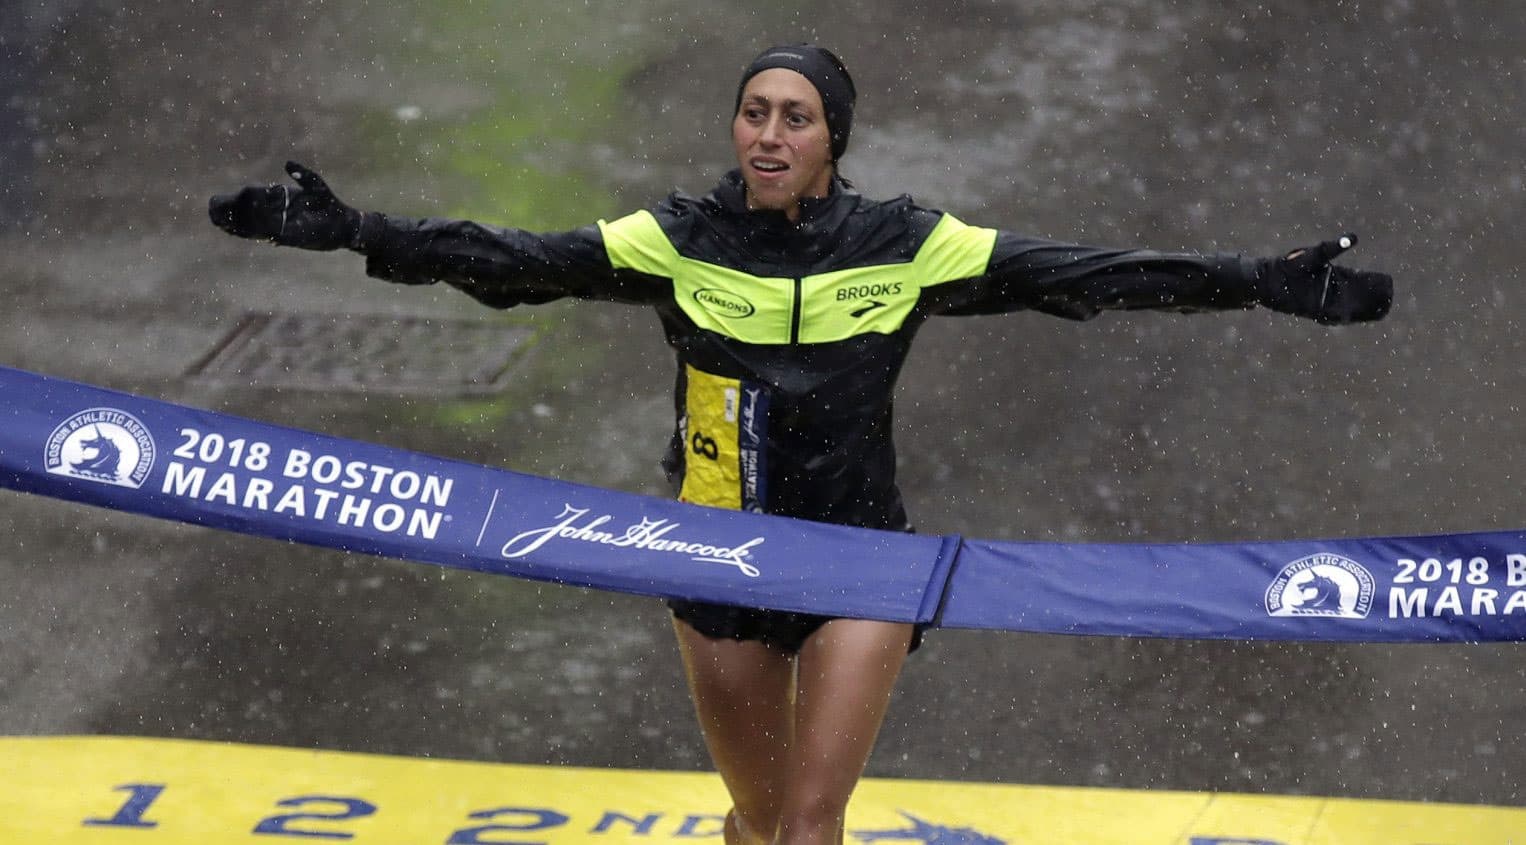 Desiree Linden, of Washington, Mich., wins the women's division of the 122nd Boston Marathon. (Charles Krupa/AP)